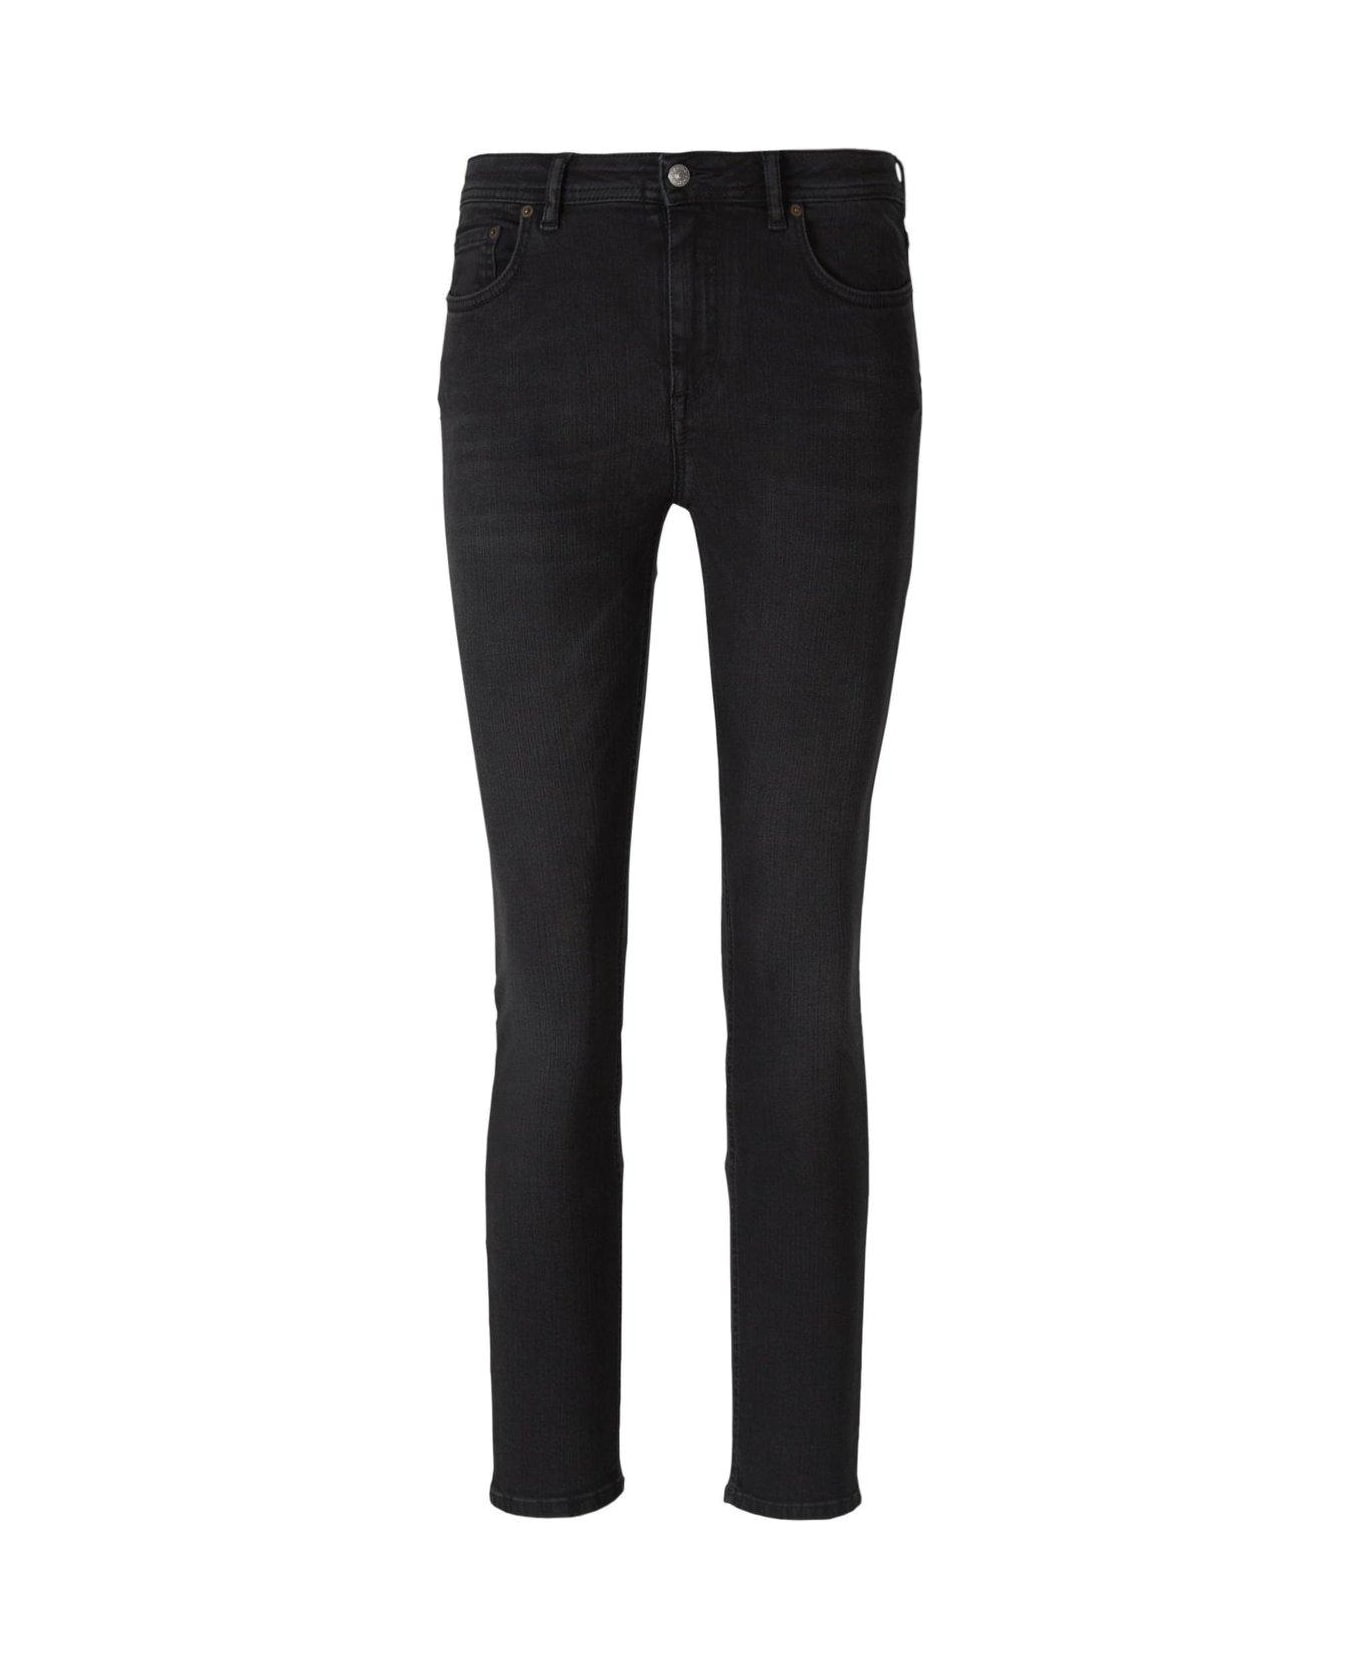 Acne Studios Fade Effect Mid-rise Skinny Jeans - Used black デニム